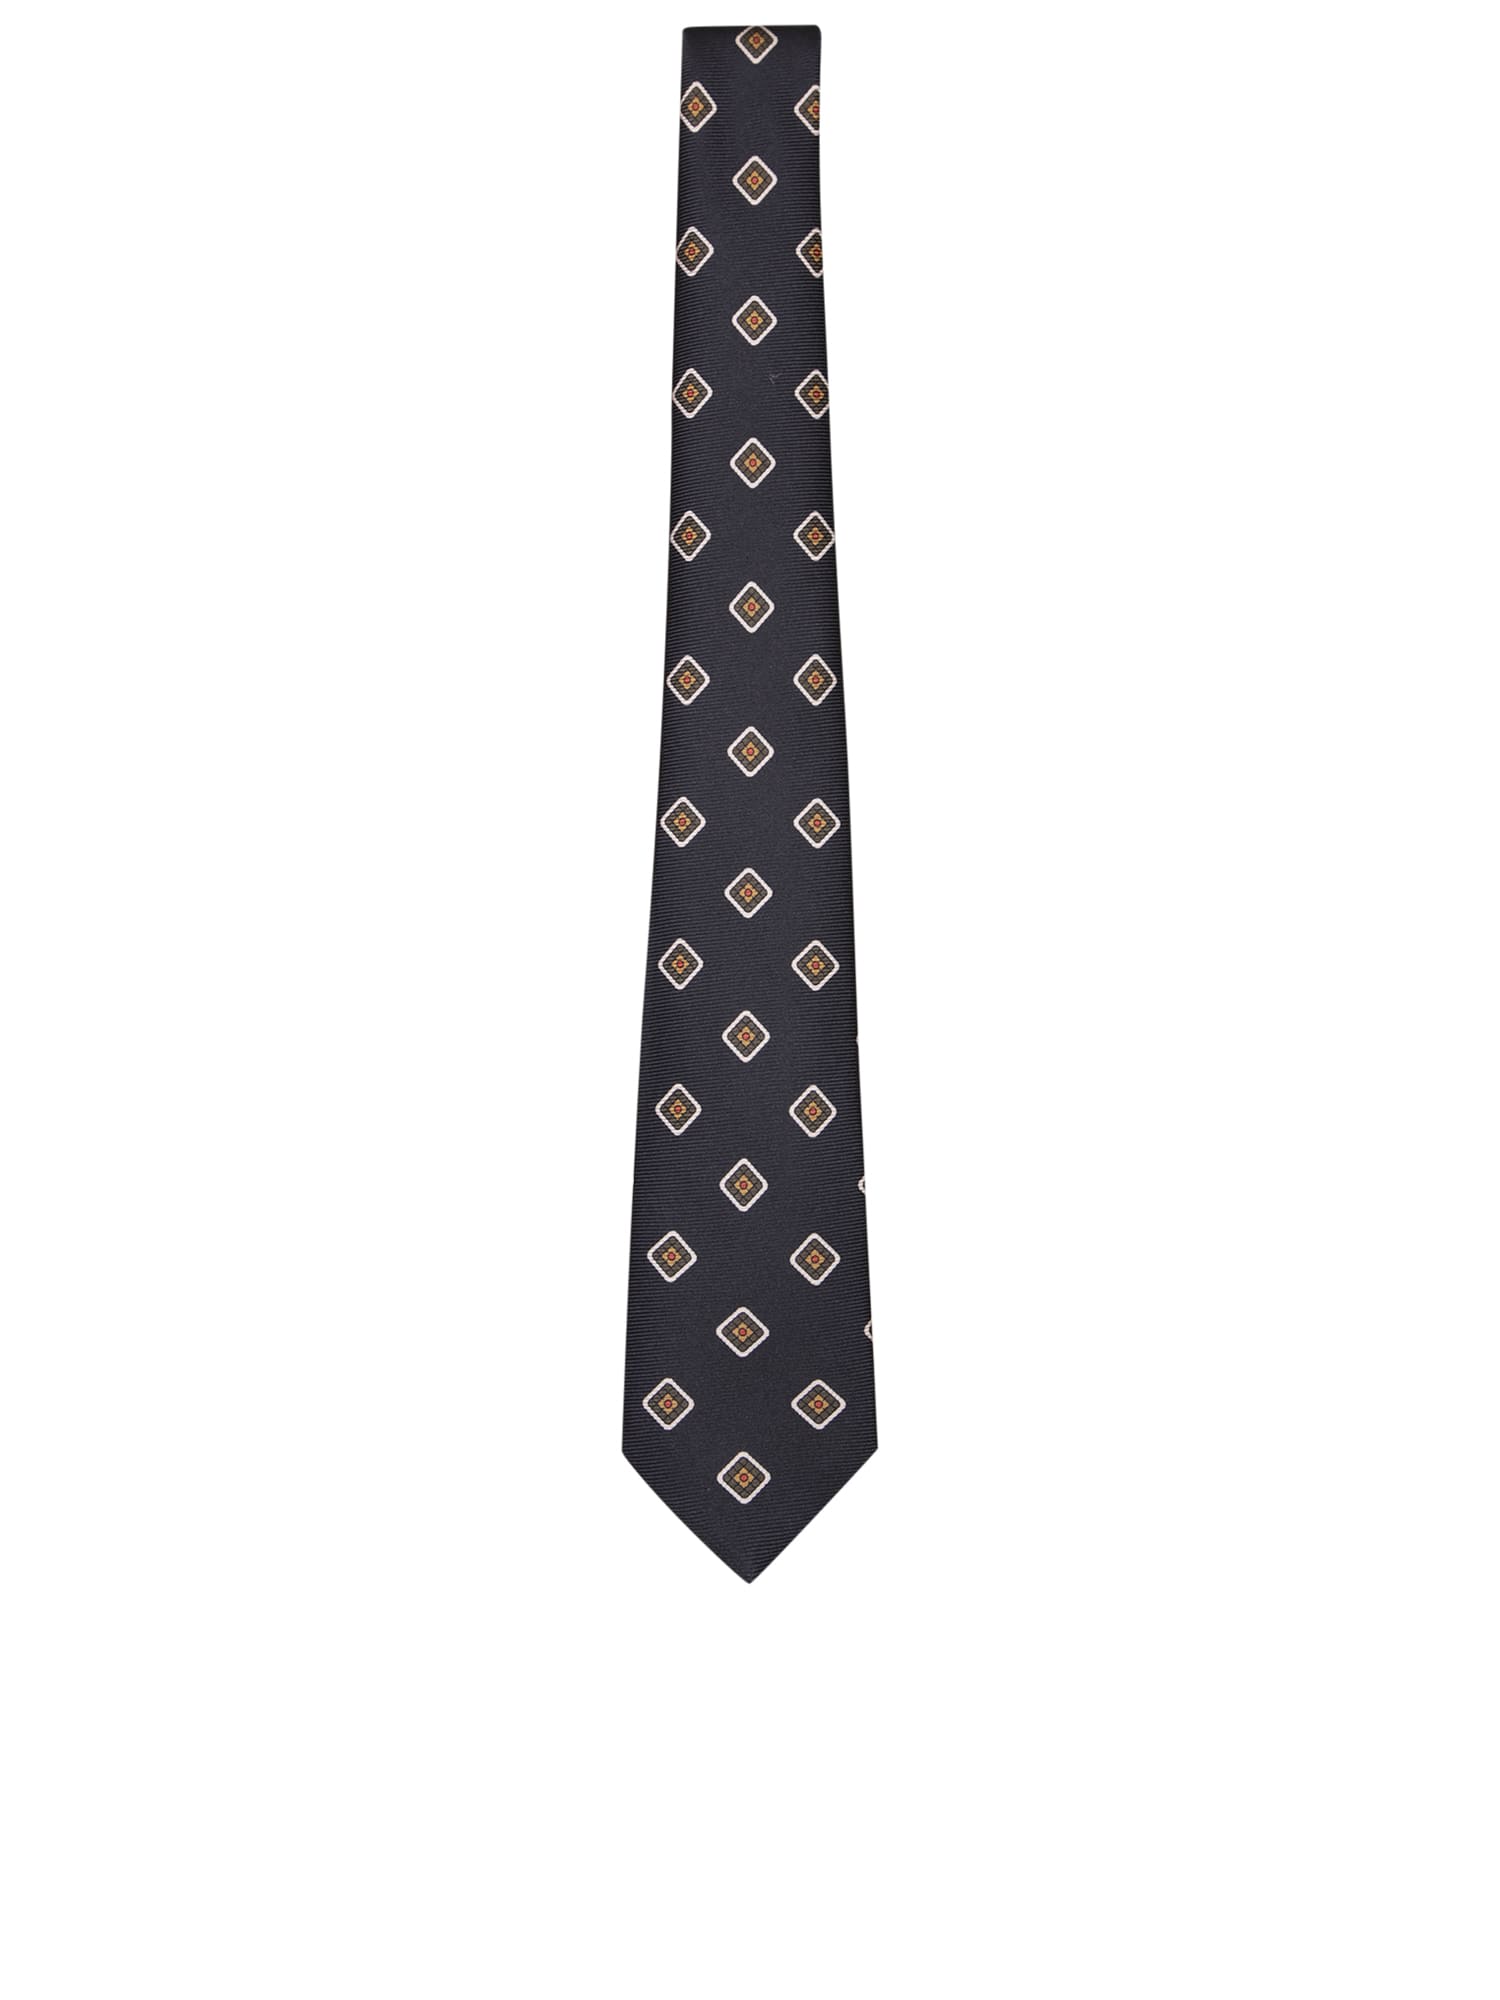 Black/ Beige Patterned Tie